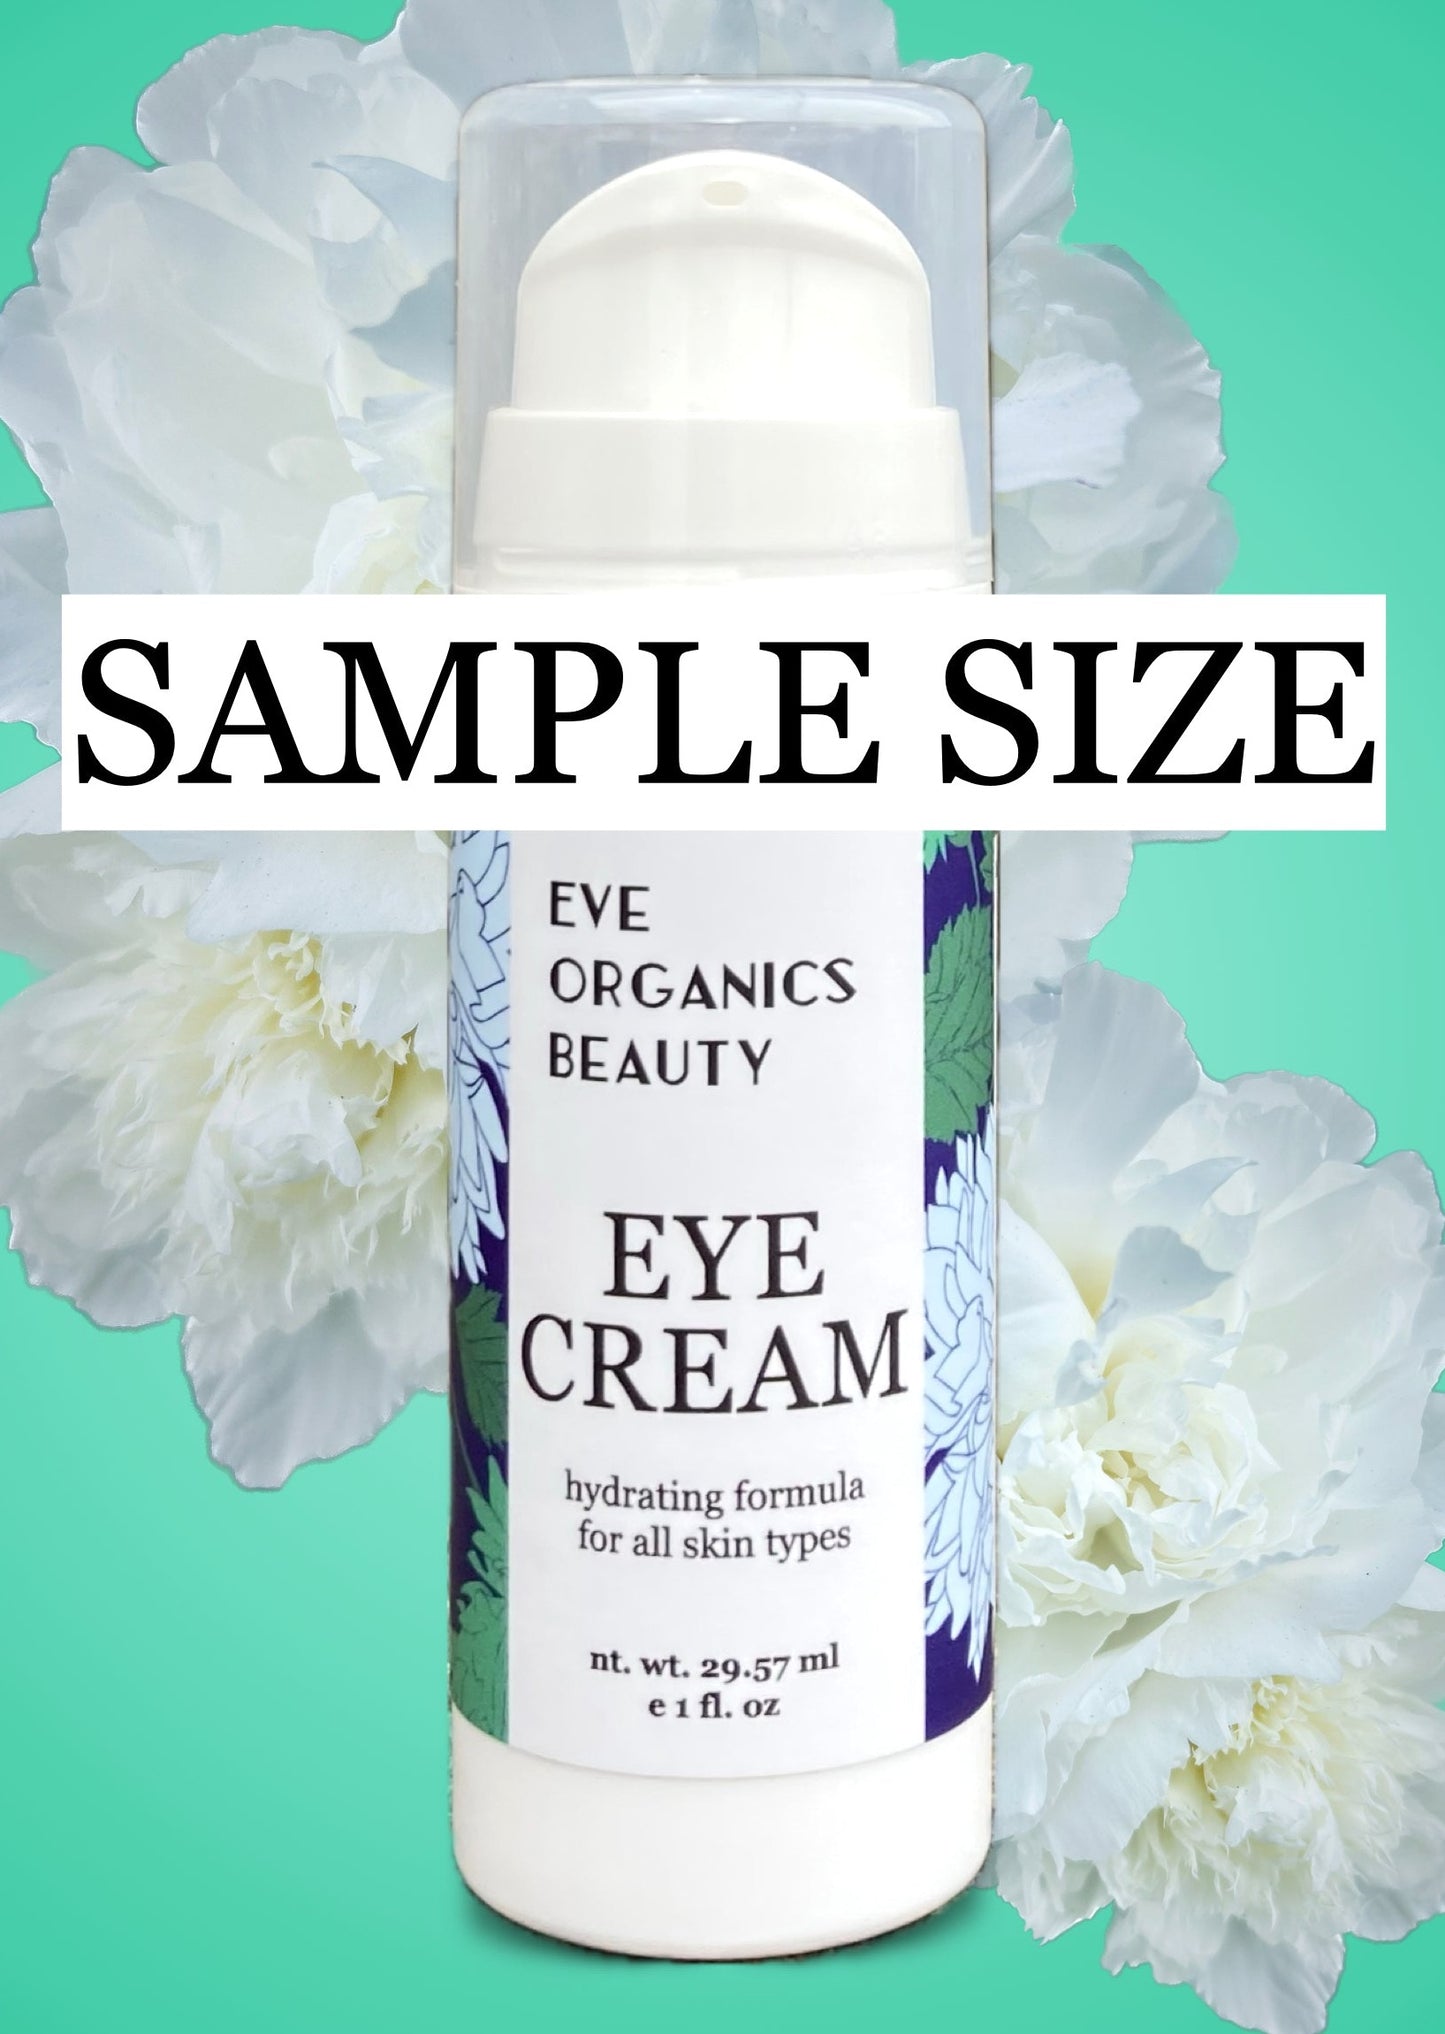 EYE CREAM / Universal / All Skin Types - Eve Organics Beauty